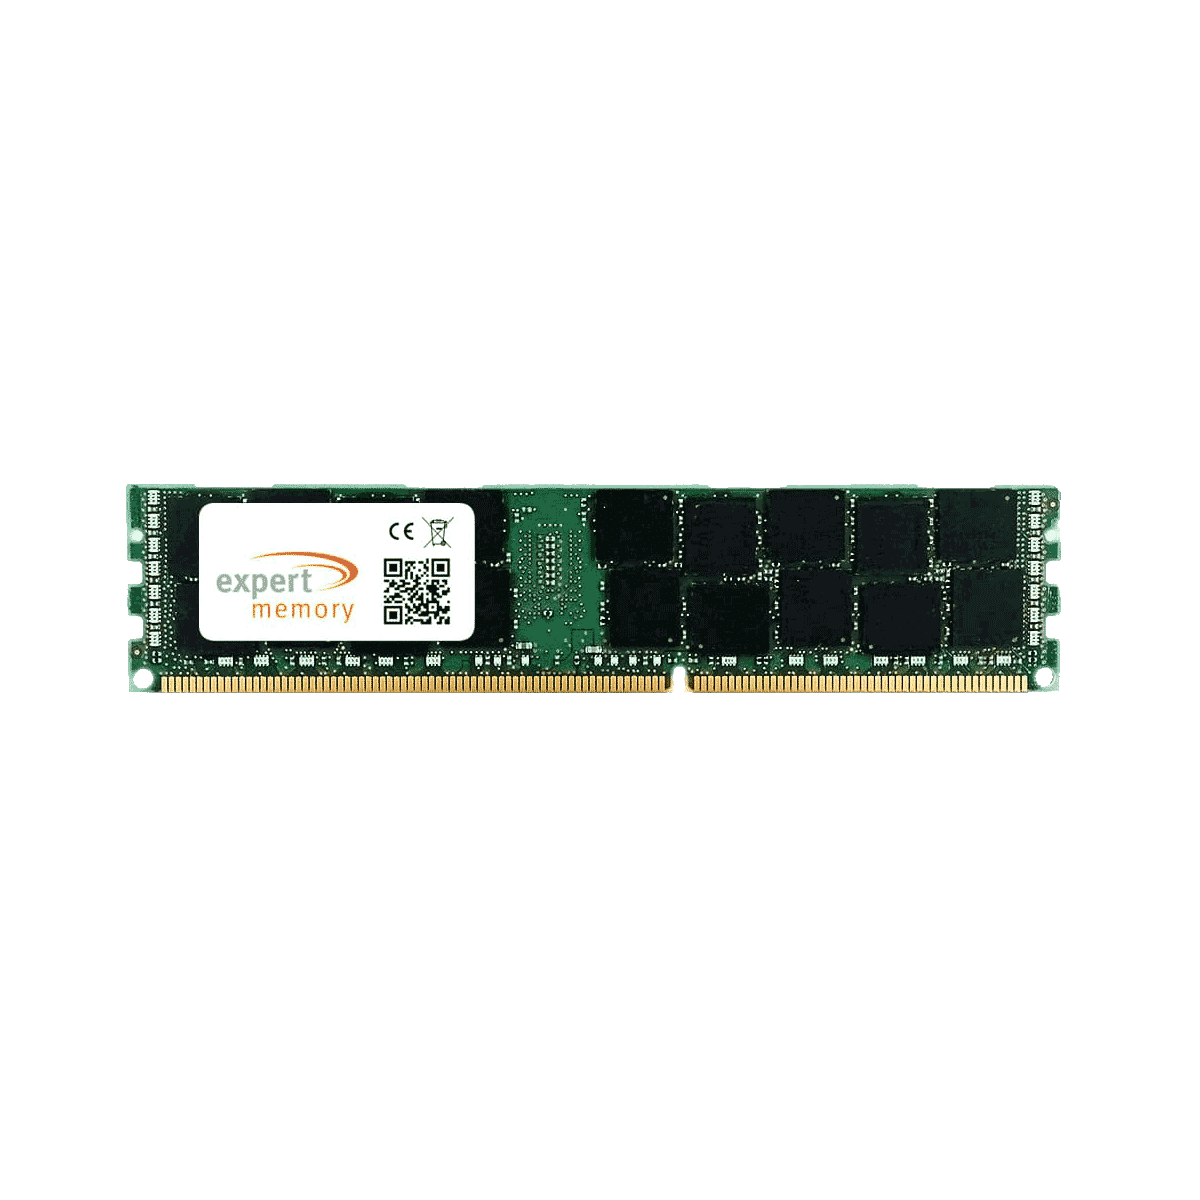 RDIMM GB 16 Primergy Memory LV CX250 16GB S2 MEMORY EXPERT Fujitsu Upgrade Server RAM 1600 DDR3 2Rx4